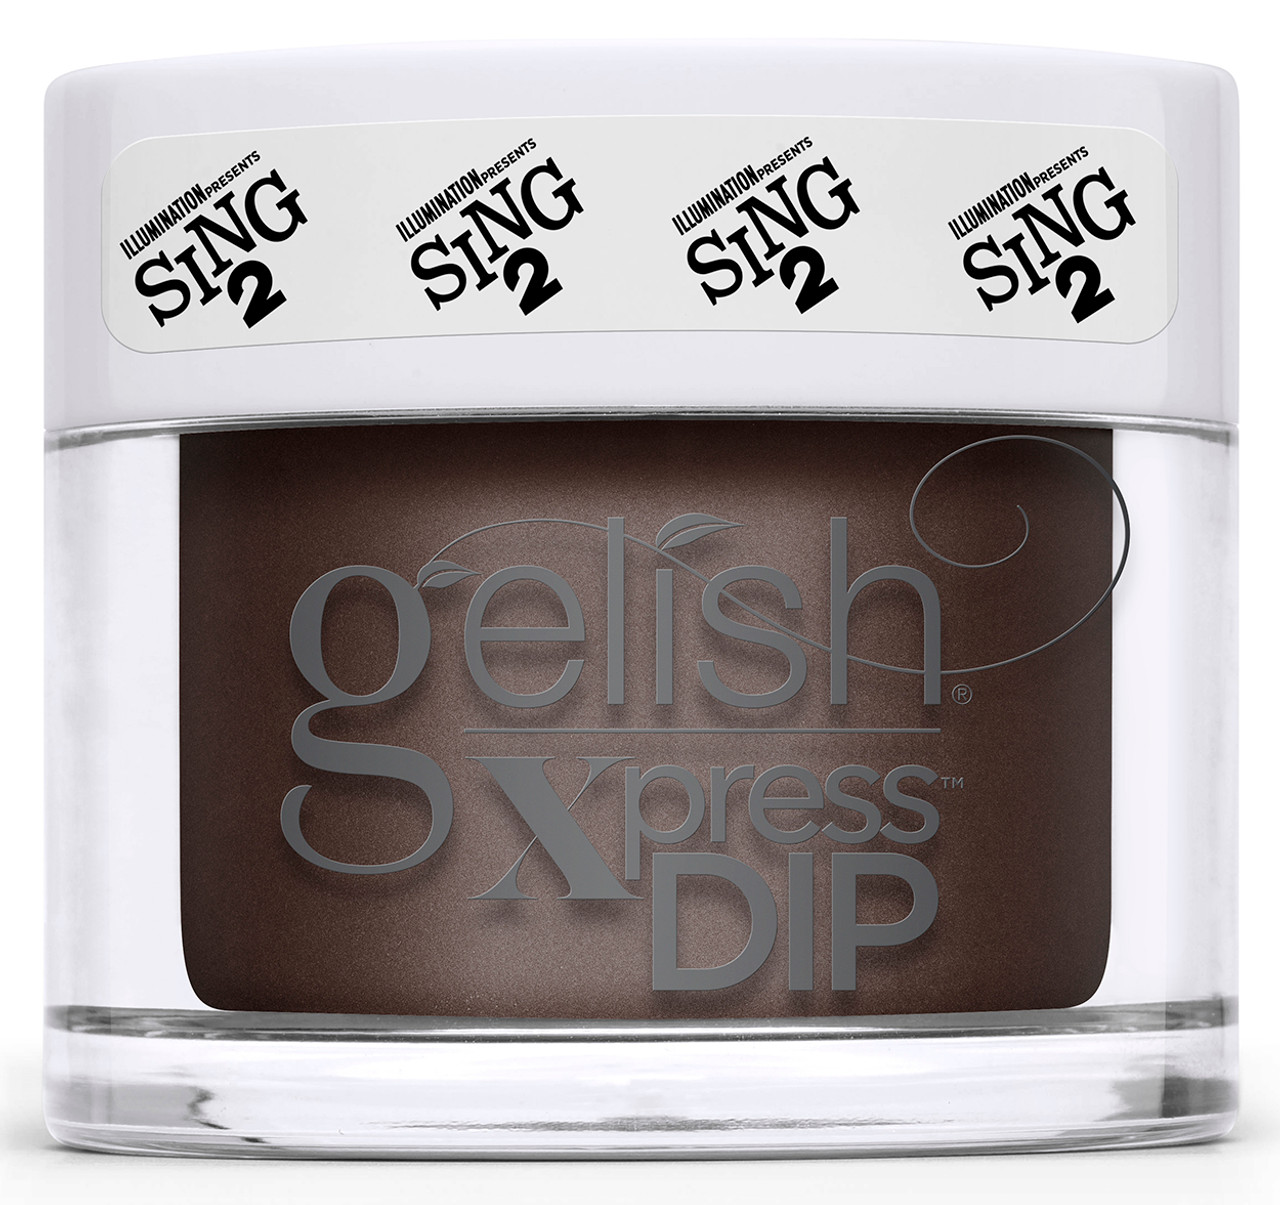 Gelish Xpress Dip Ready To Work It - 1.5 oz / 43 g